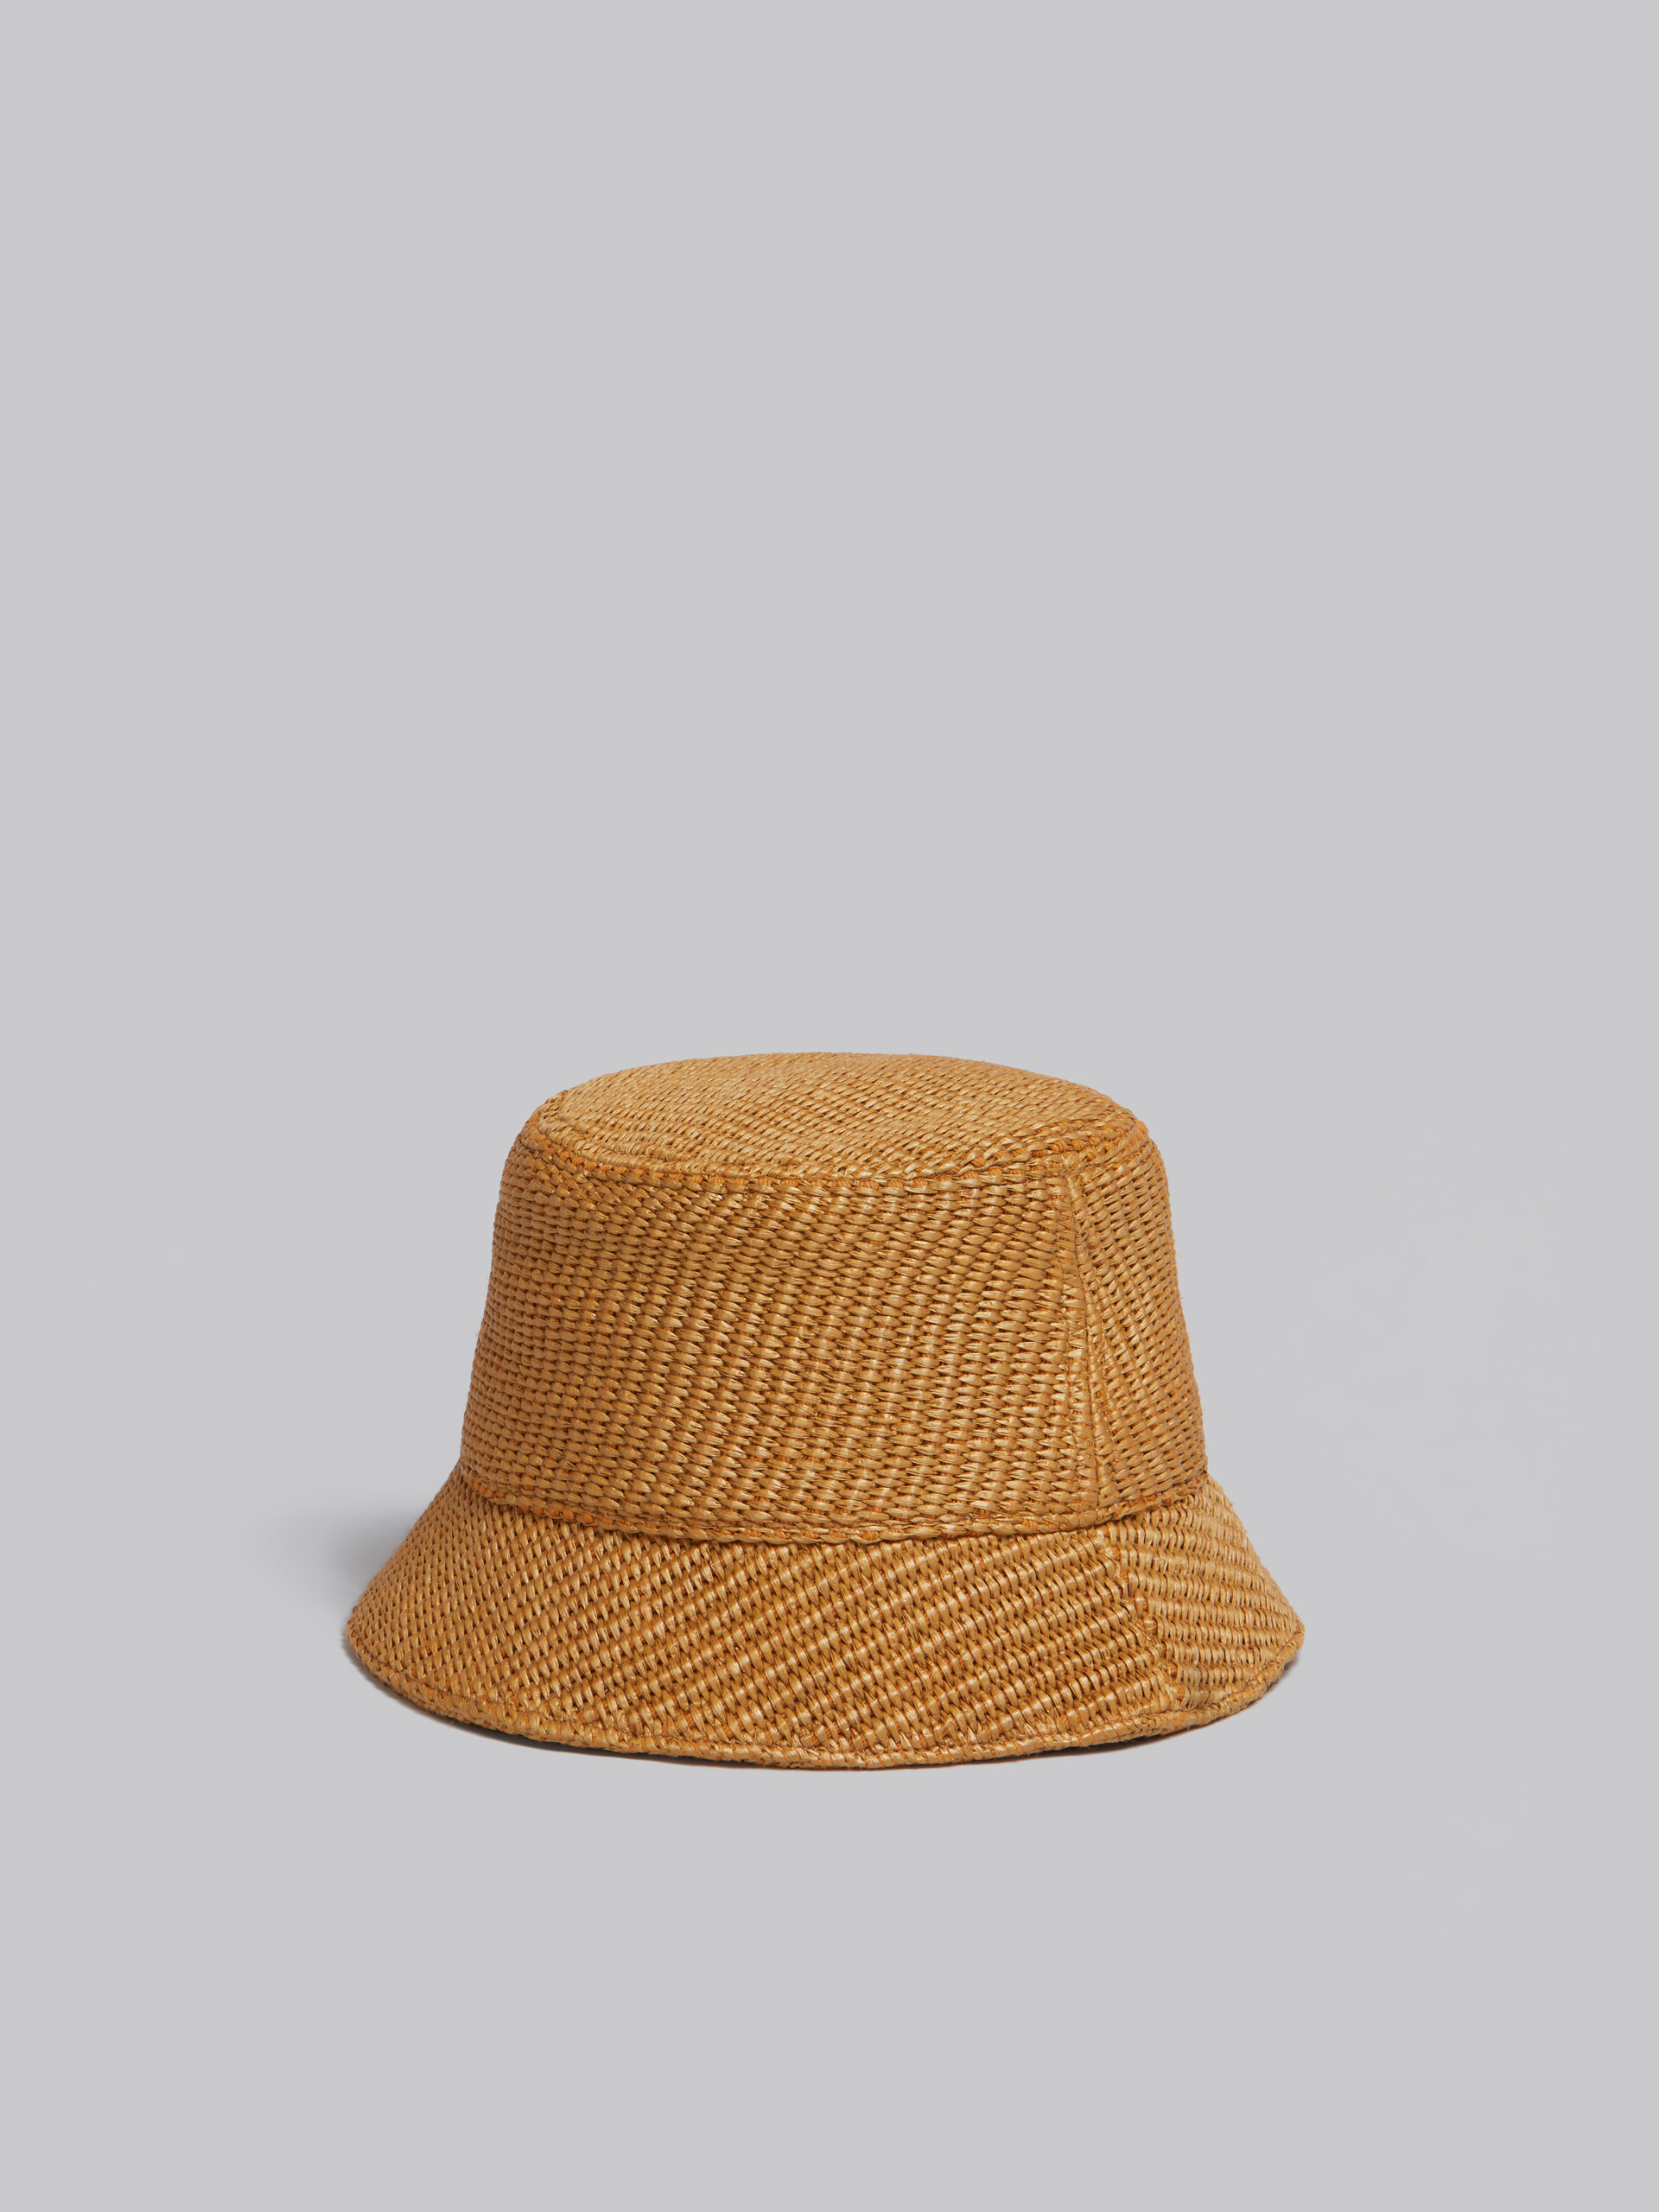 Marni x No Vacancy Inn - Caramel hat in raffia fabric - Hats - Image 3